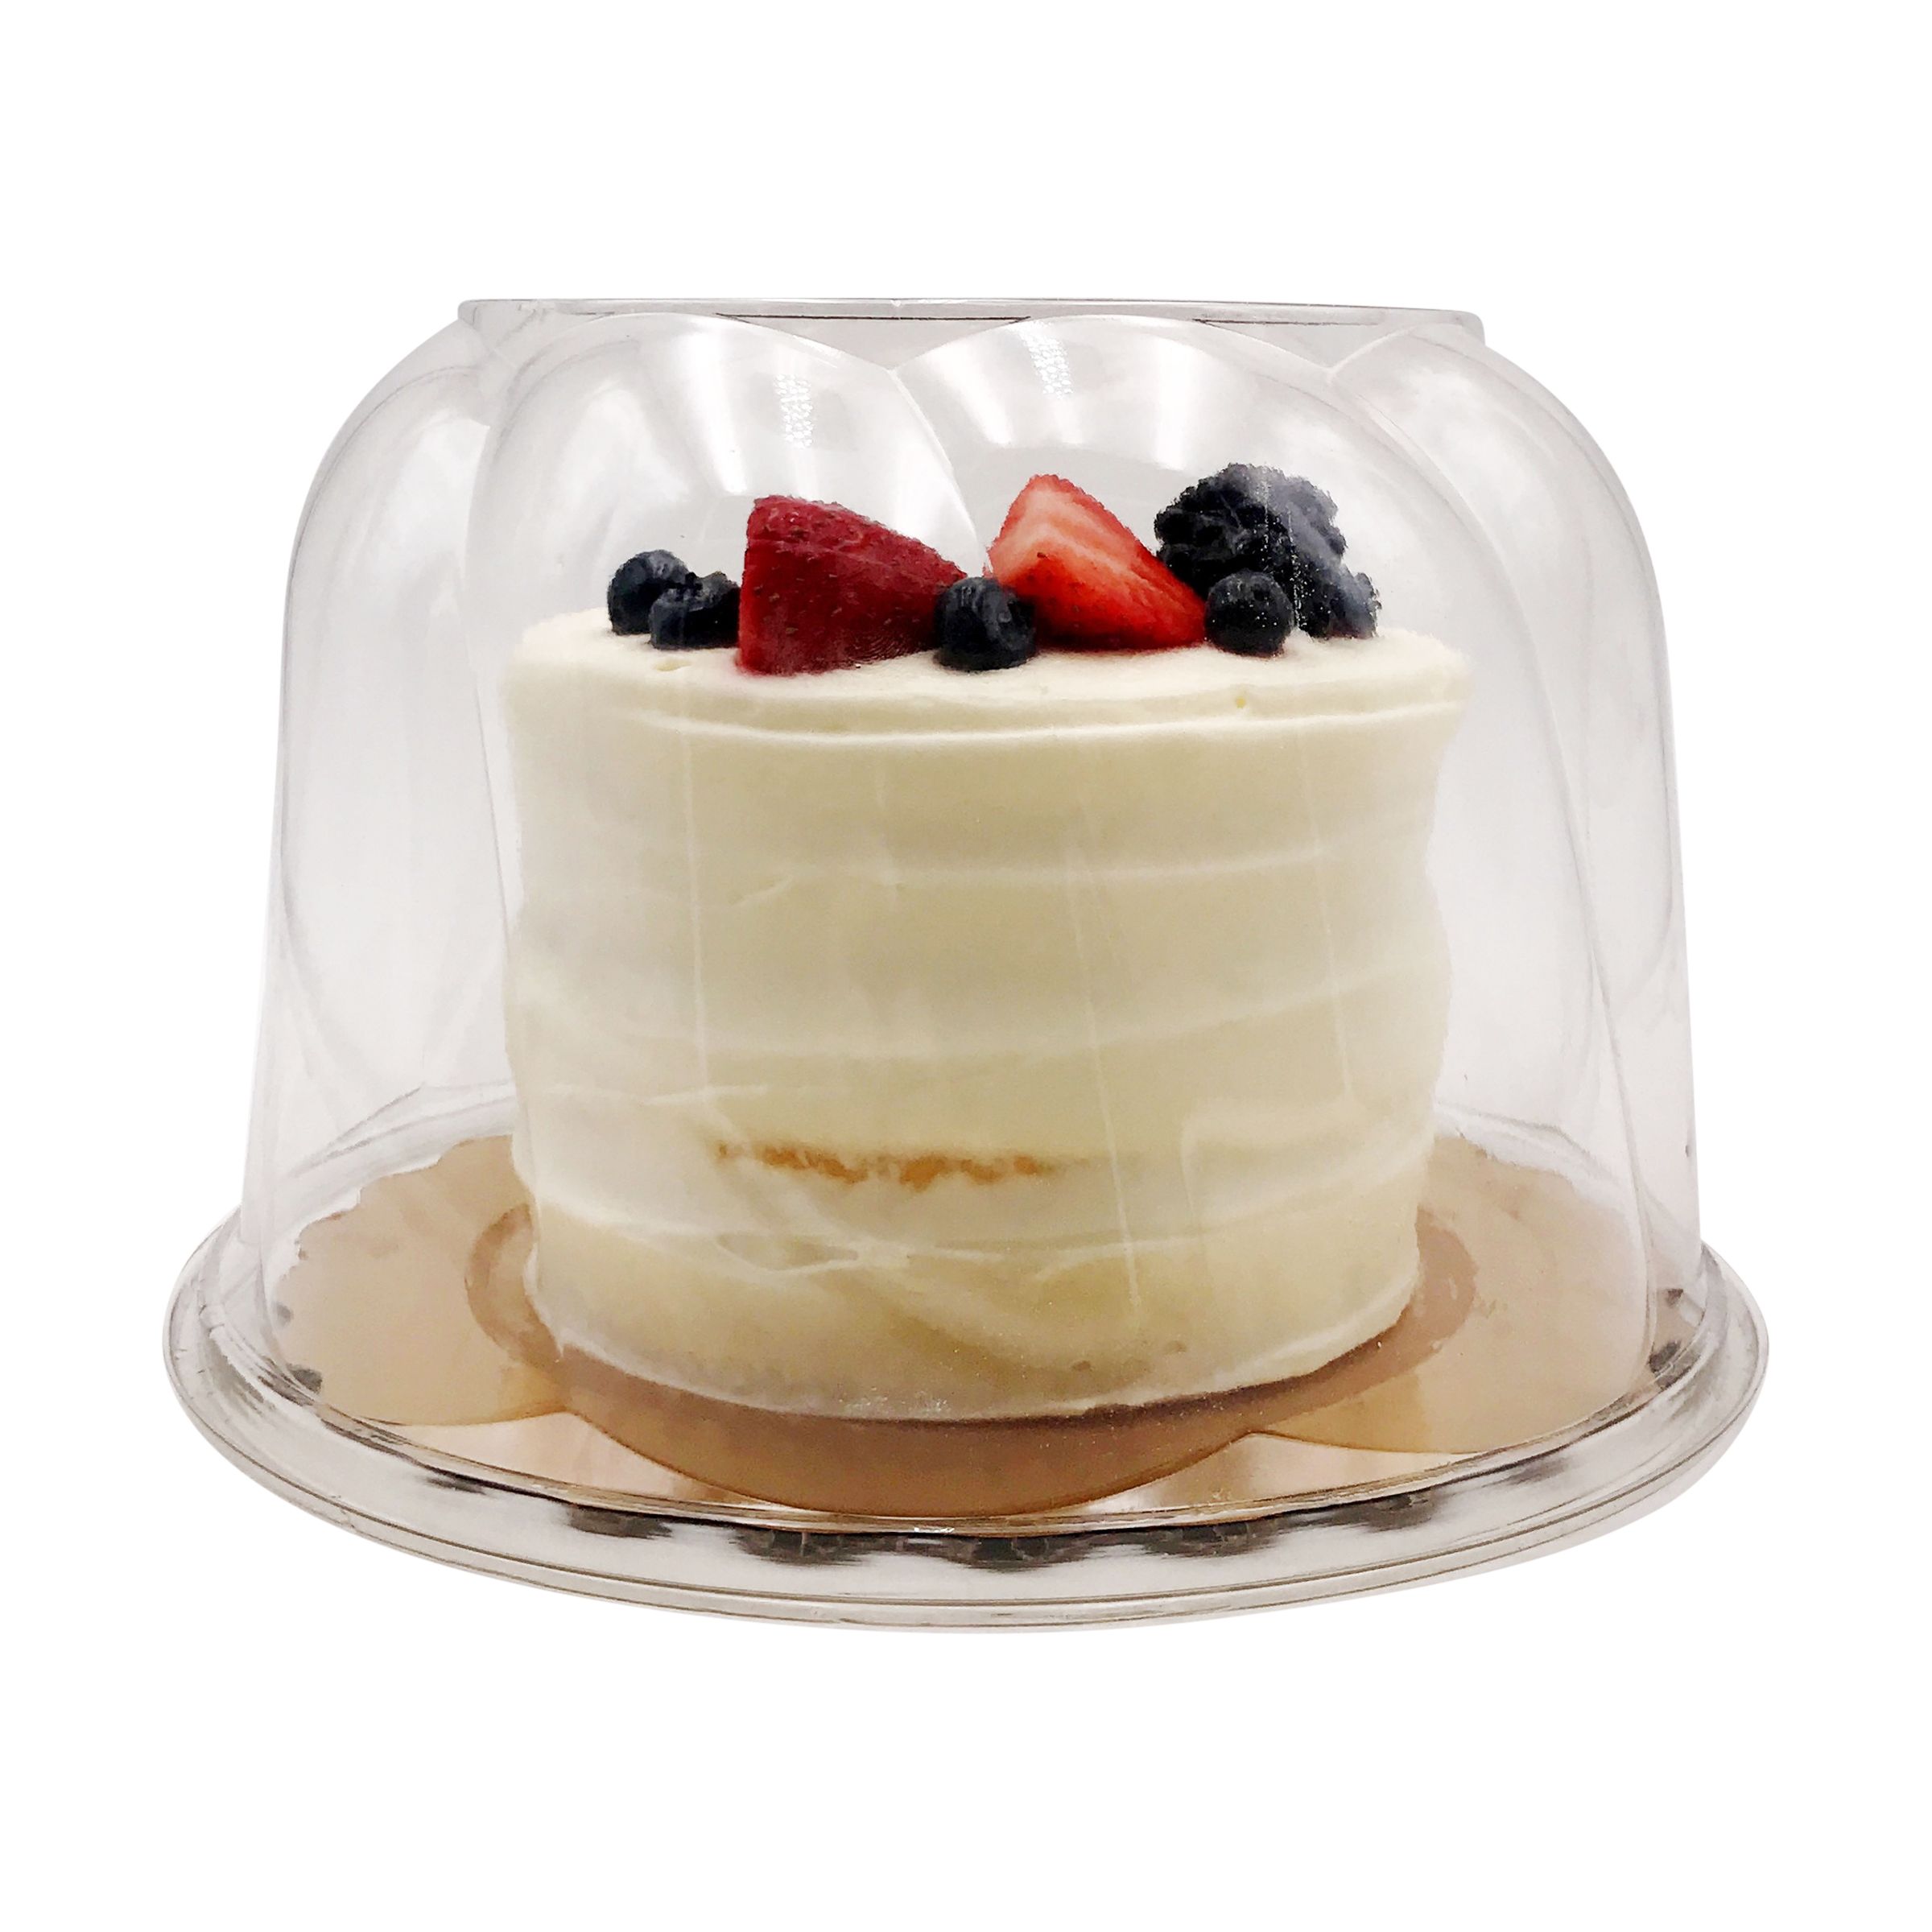 Chantilly Berry Cake 5inch, 1 lb, Whole Foods Marketâ¢